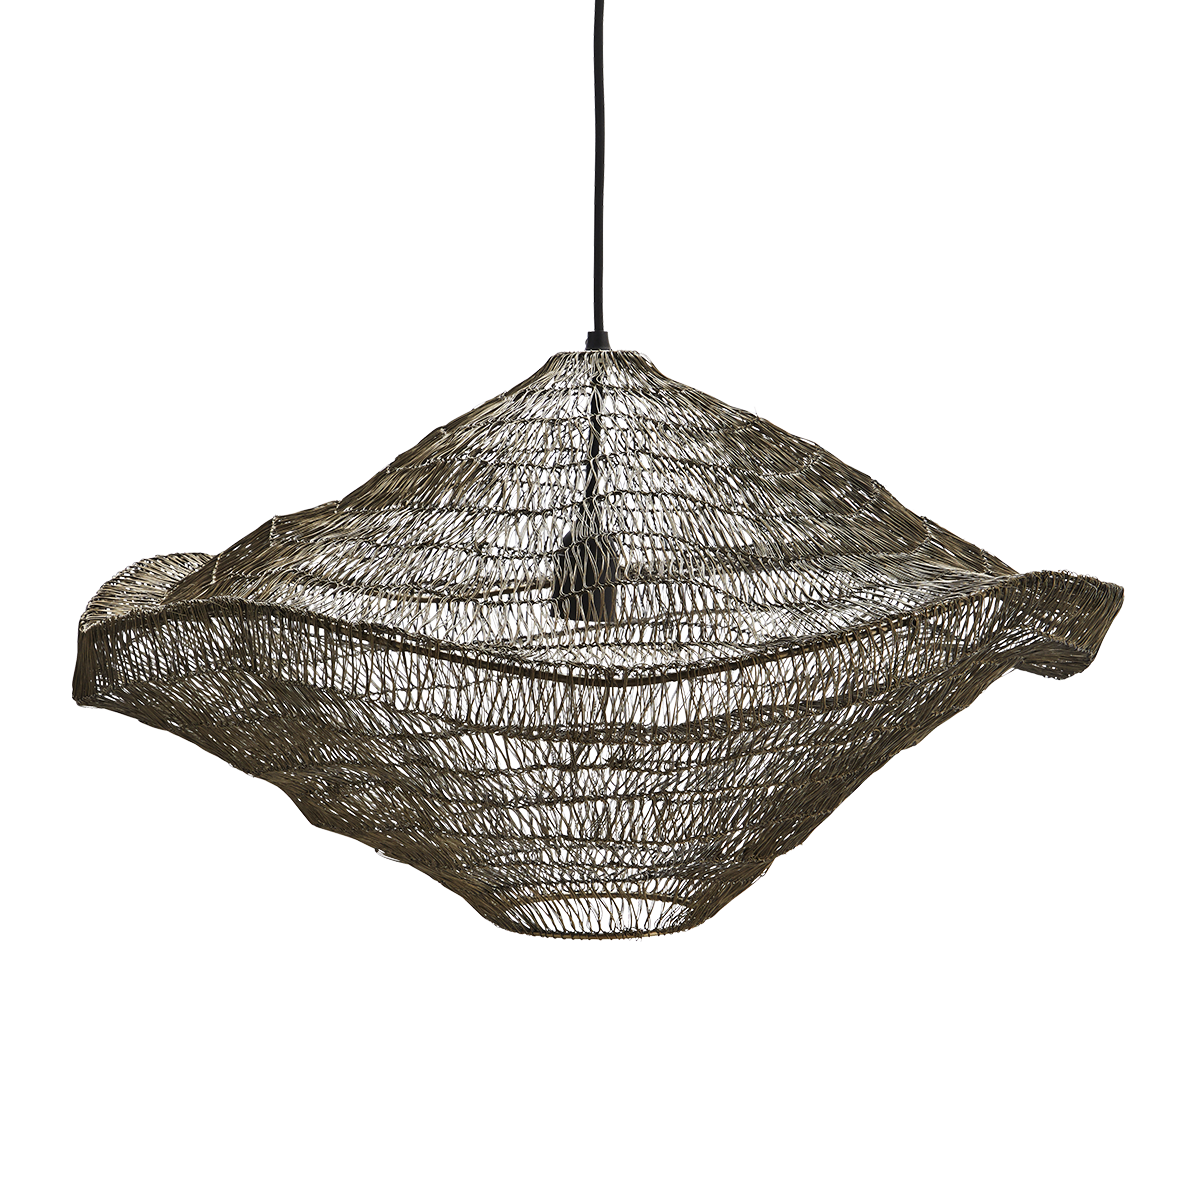 Handmade iron ceiling lamp